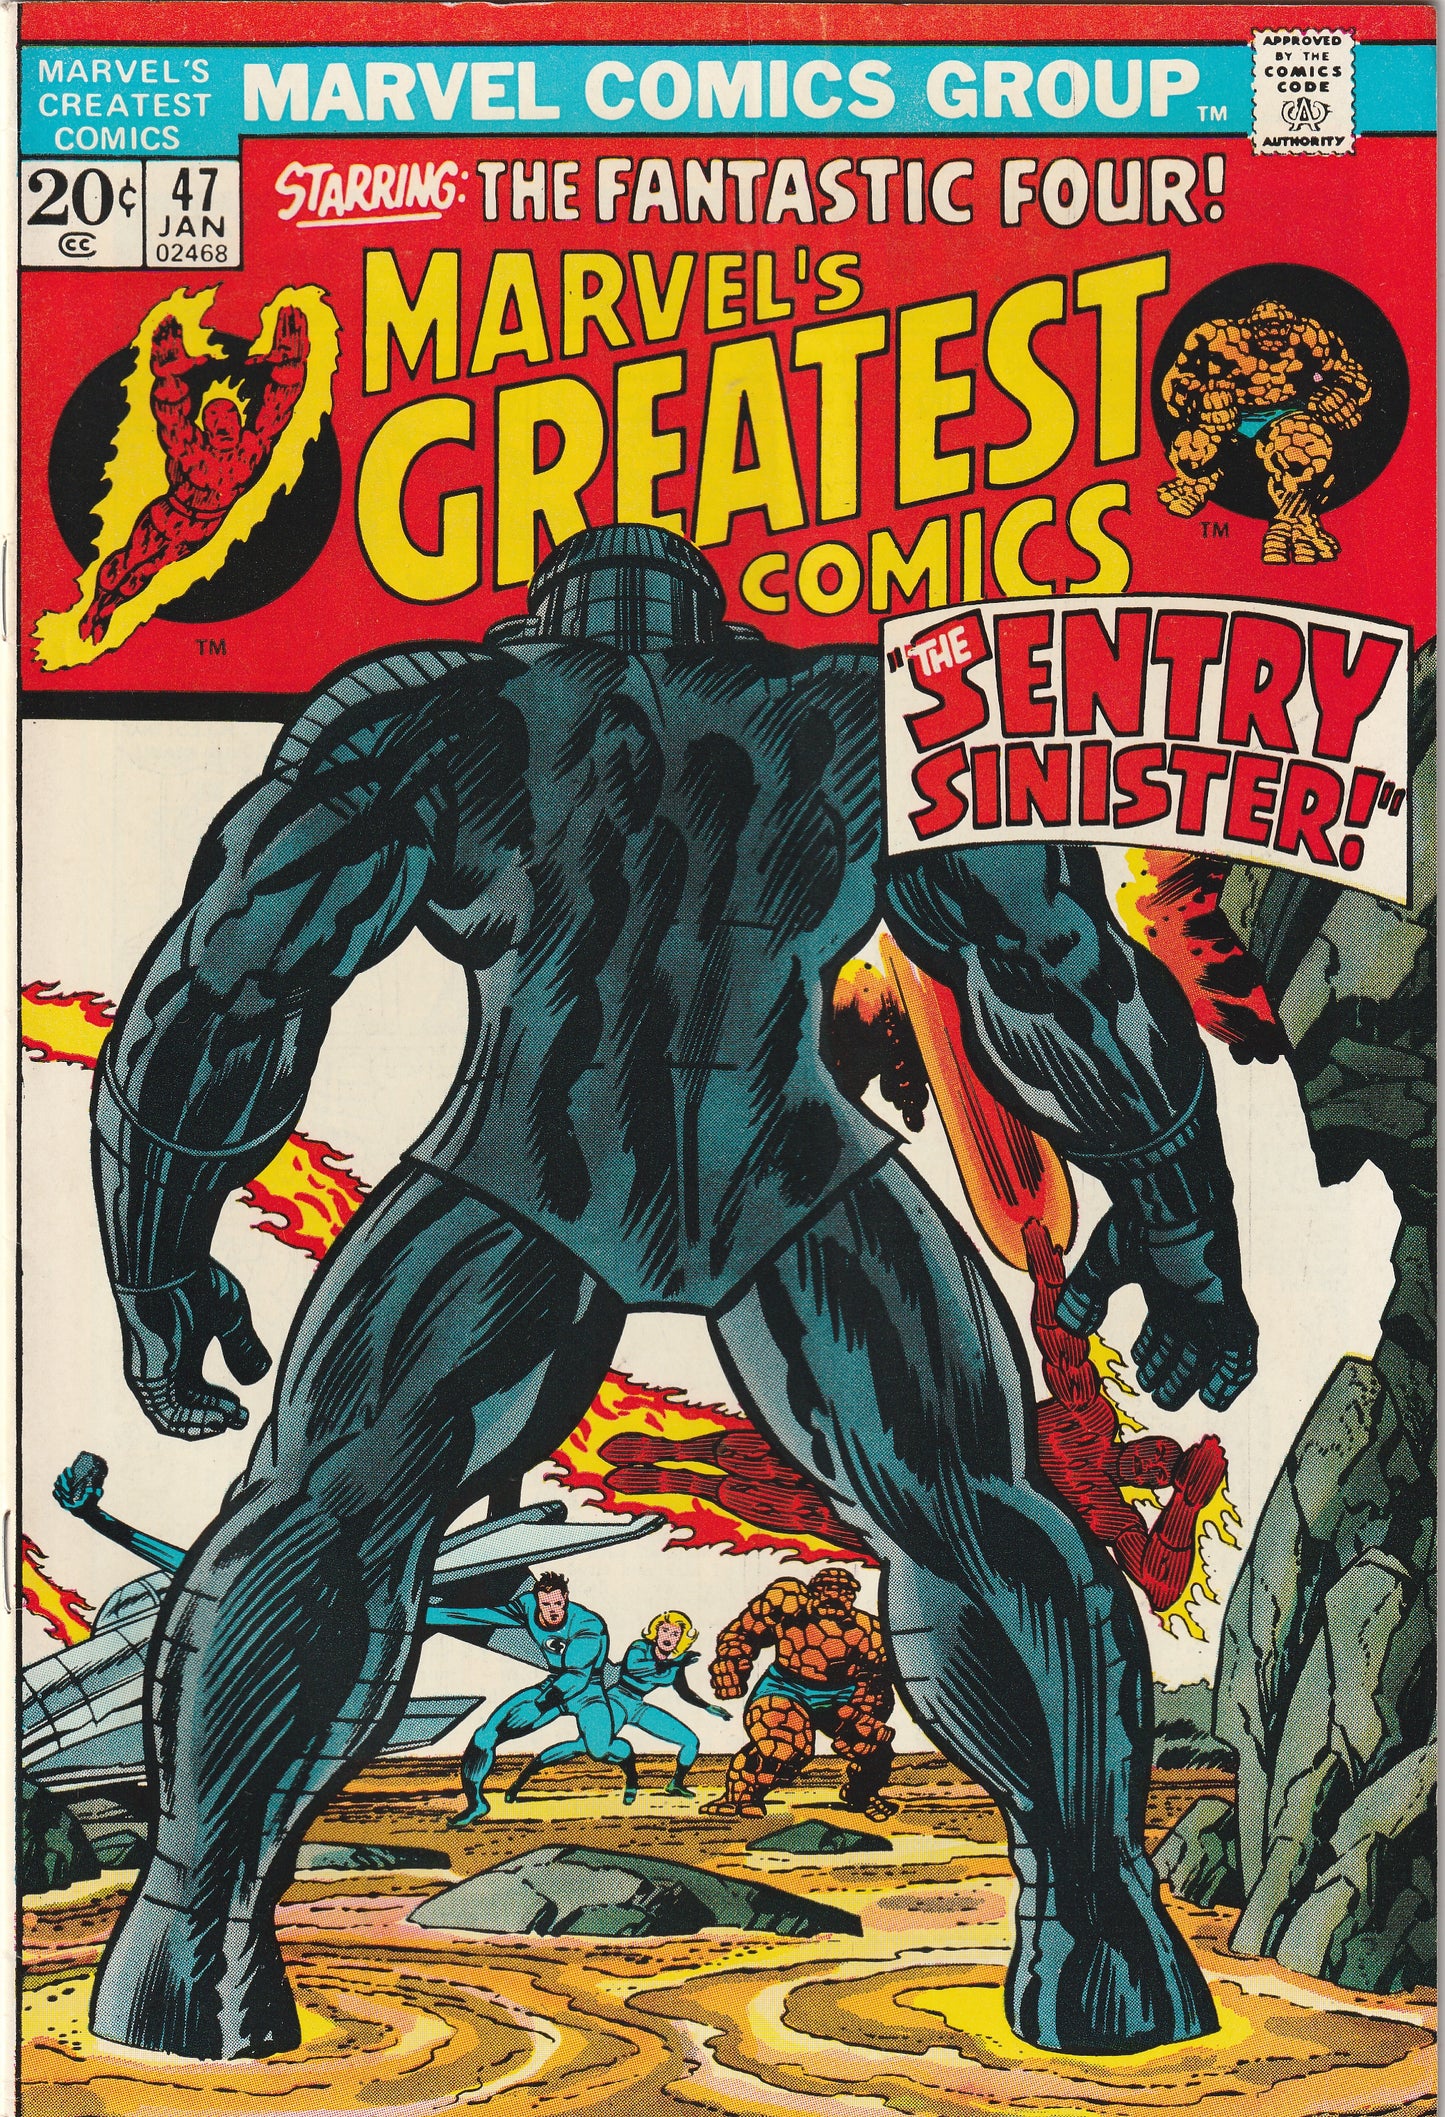 Marvel's Greatest Comics #47 (1974) - The Sentry Sinister